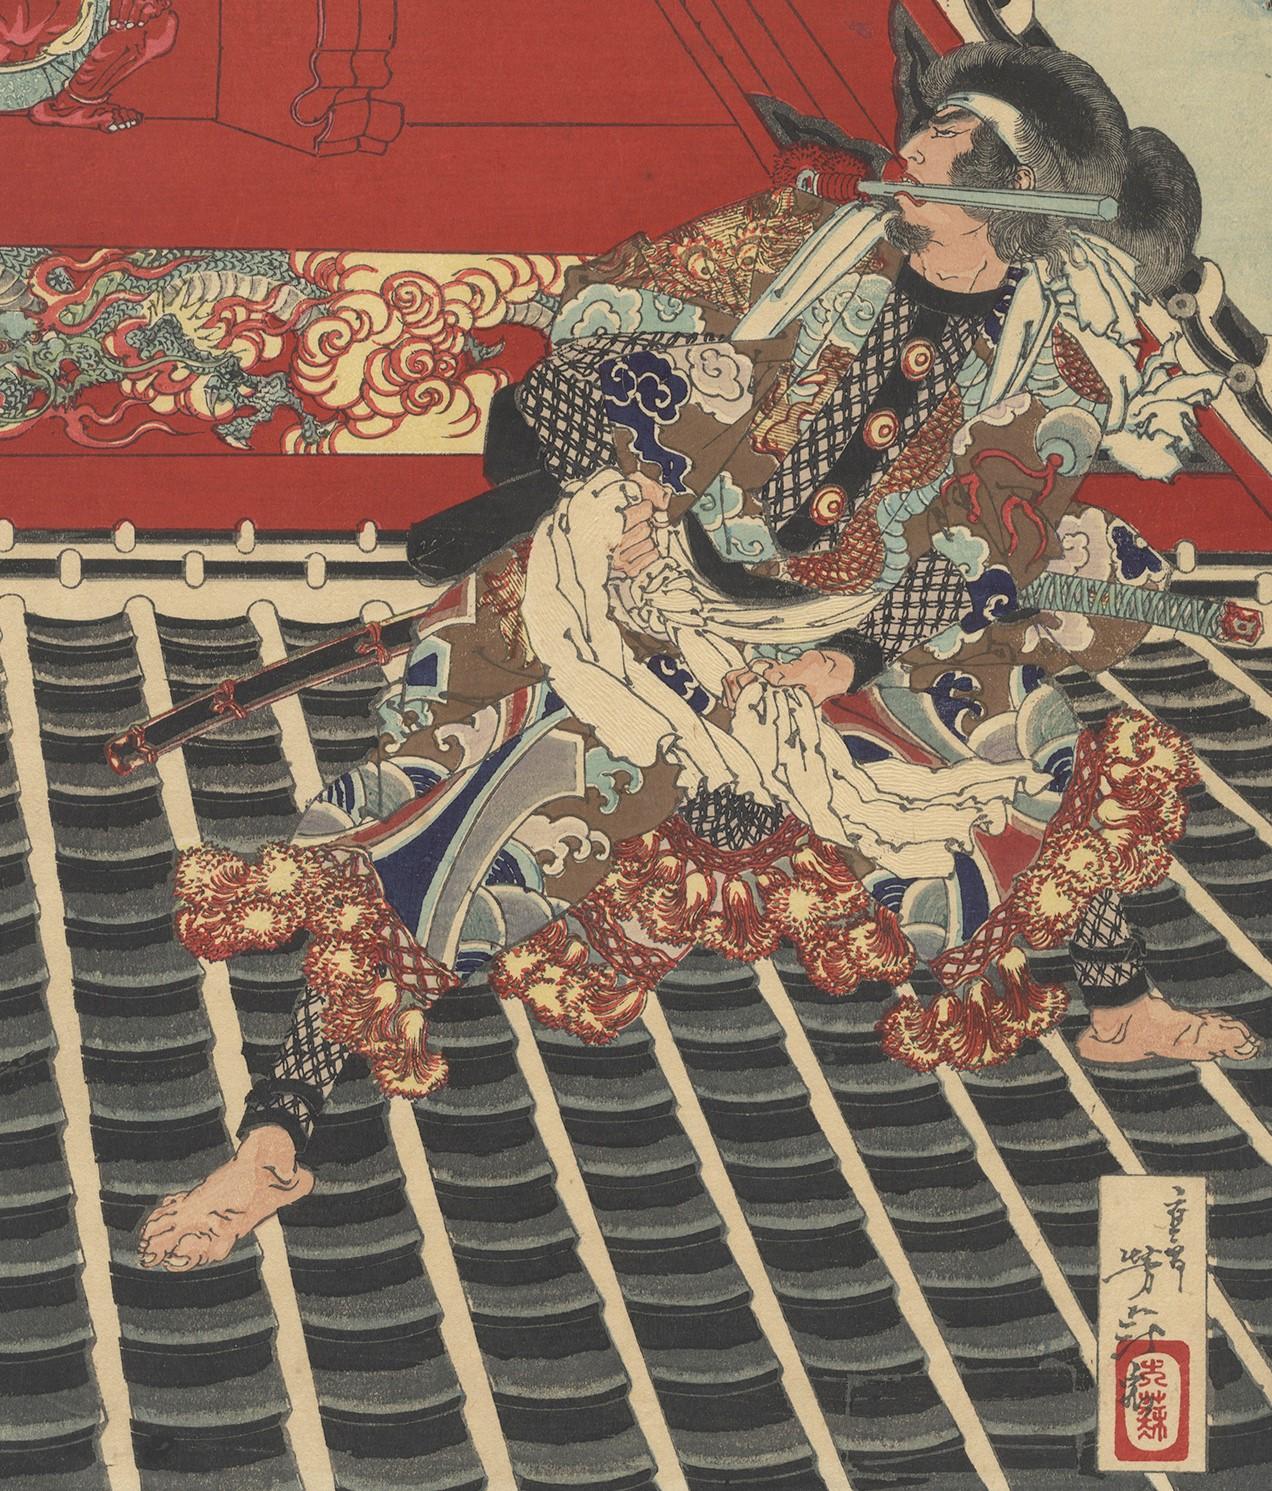 Artist: Yoshitoshi Tsukioka (1839 - 1892)
Title: Inuzuka and Inukai Fight Atop a Pavillion
Publisher: Hasegawa Tsunejiro
Date: 1885
Size:: (T) 24.6 x 35.8  (B) 24.3 x 37.6 cm
Condition: (Top) Light glue residue on bottom edge. Left and right edge